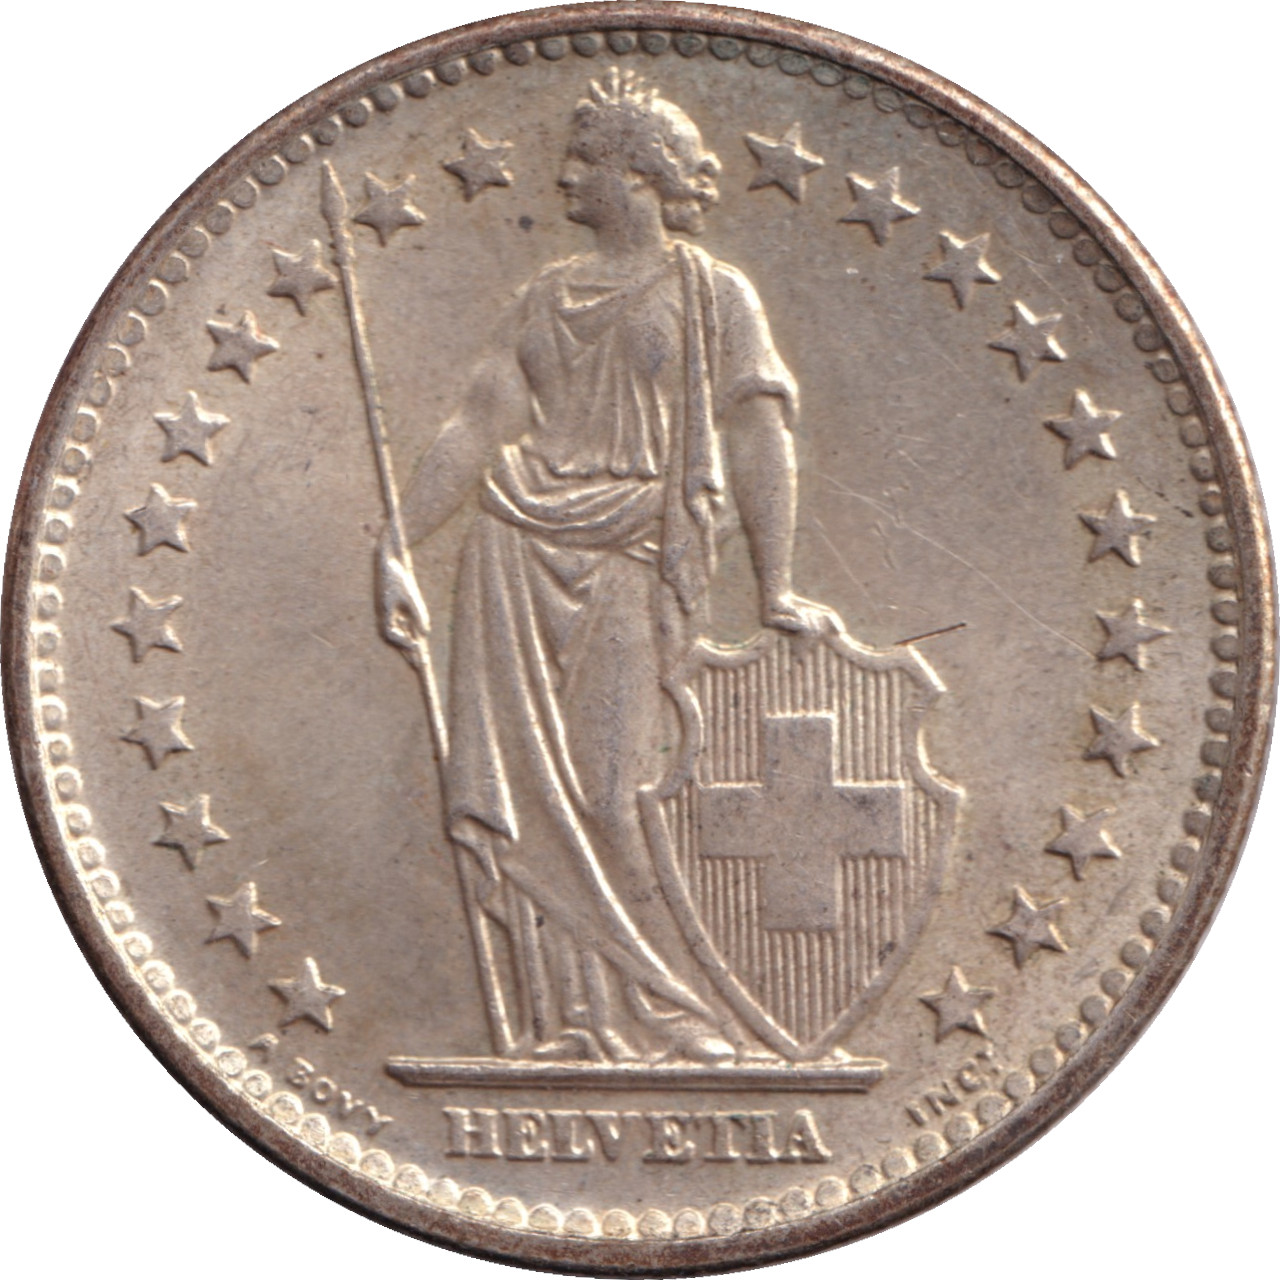 2 francs - Standing Helvetia